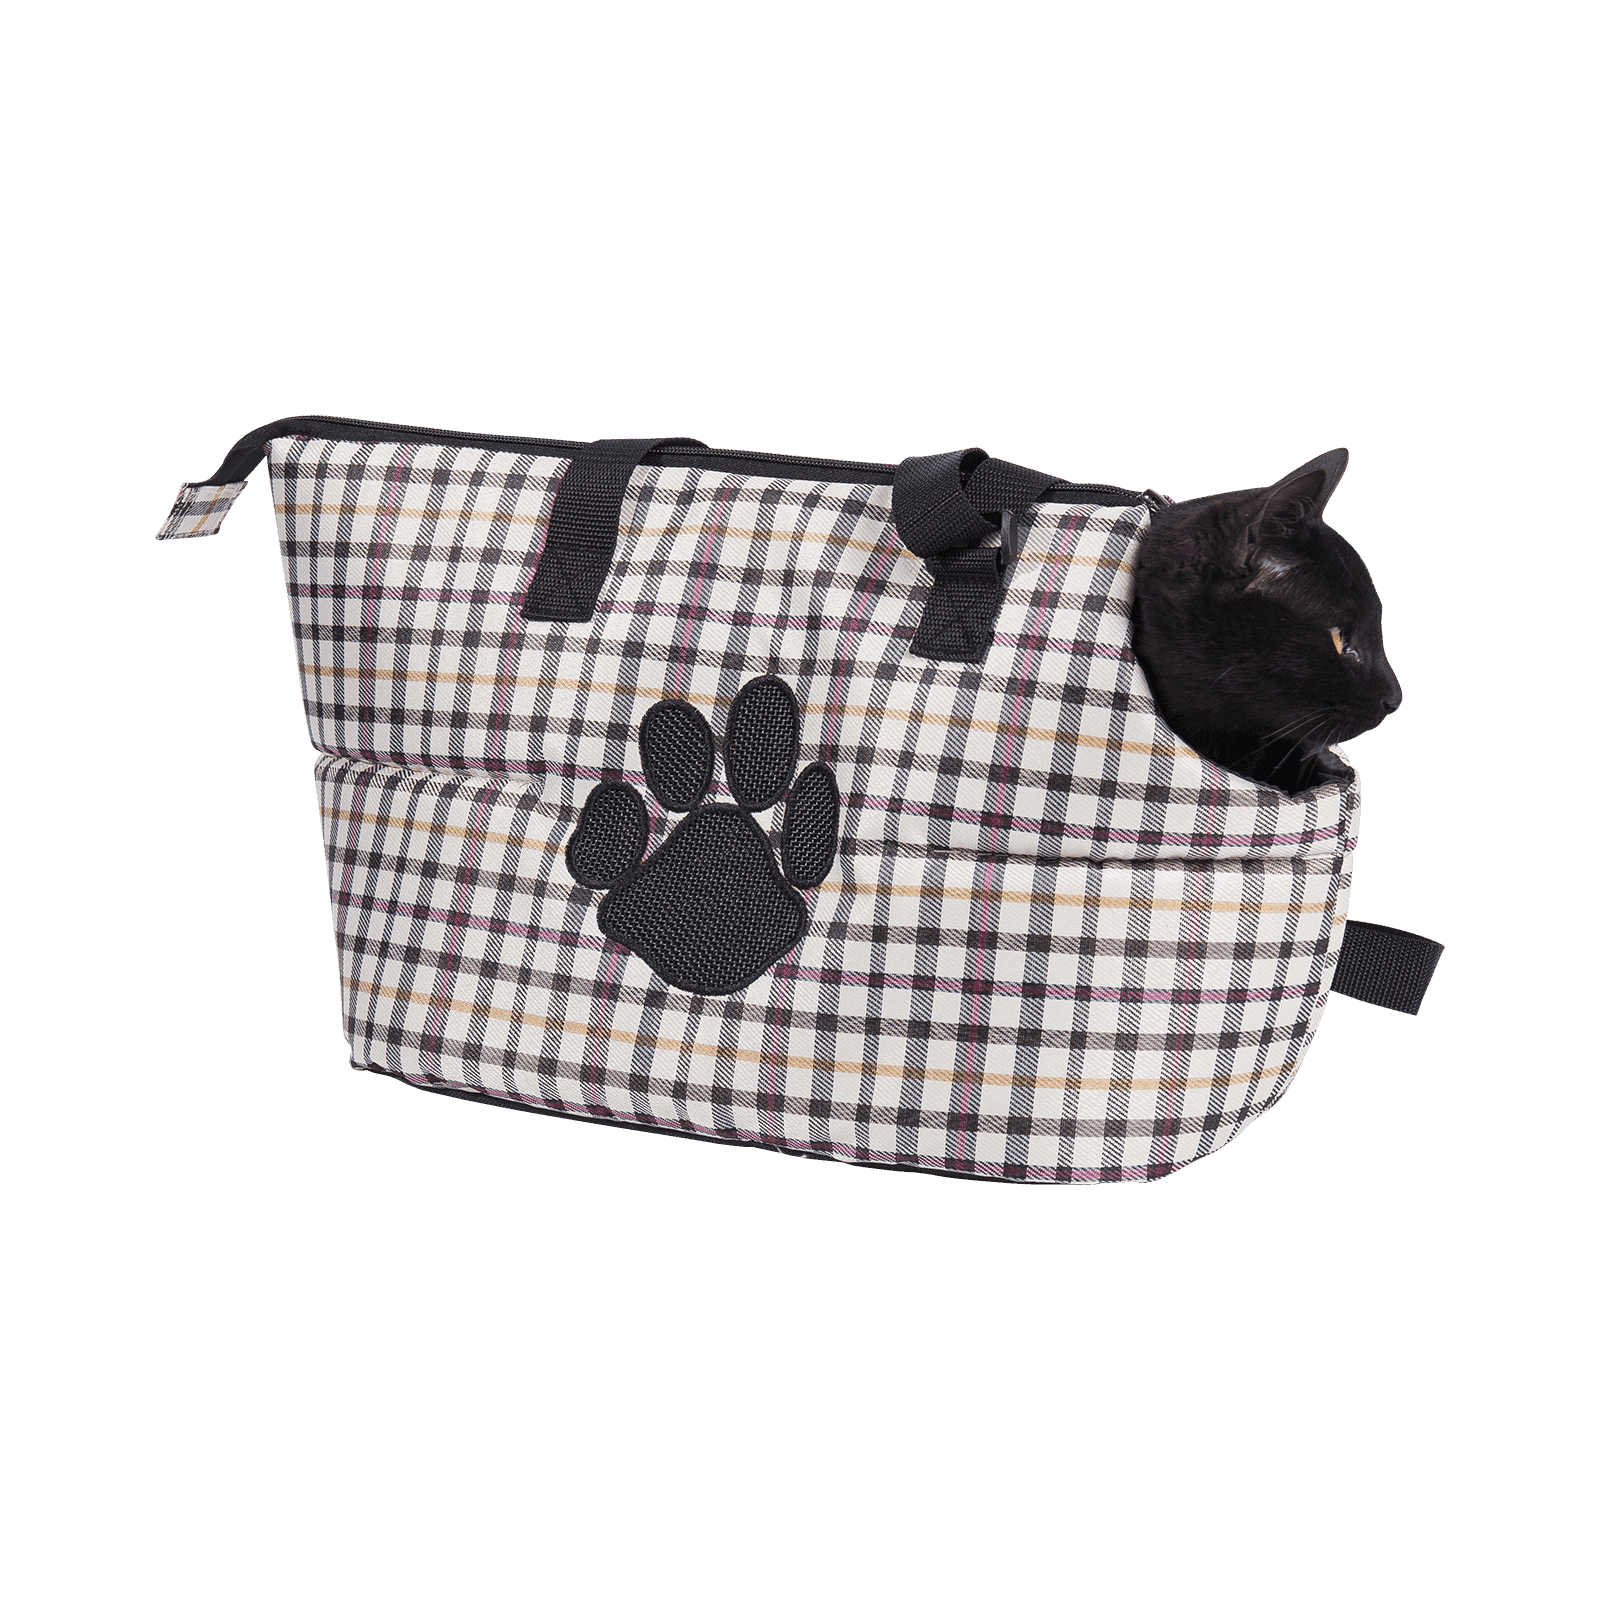 Multi-functional pet carrier bags